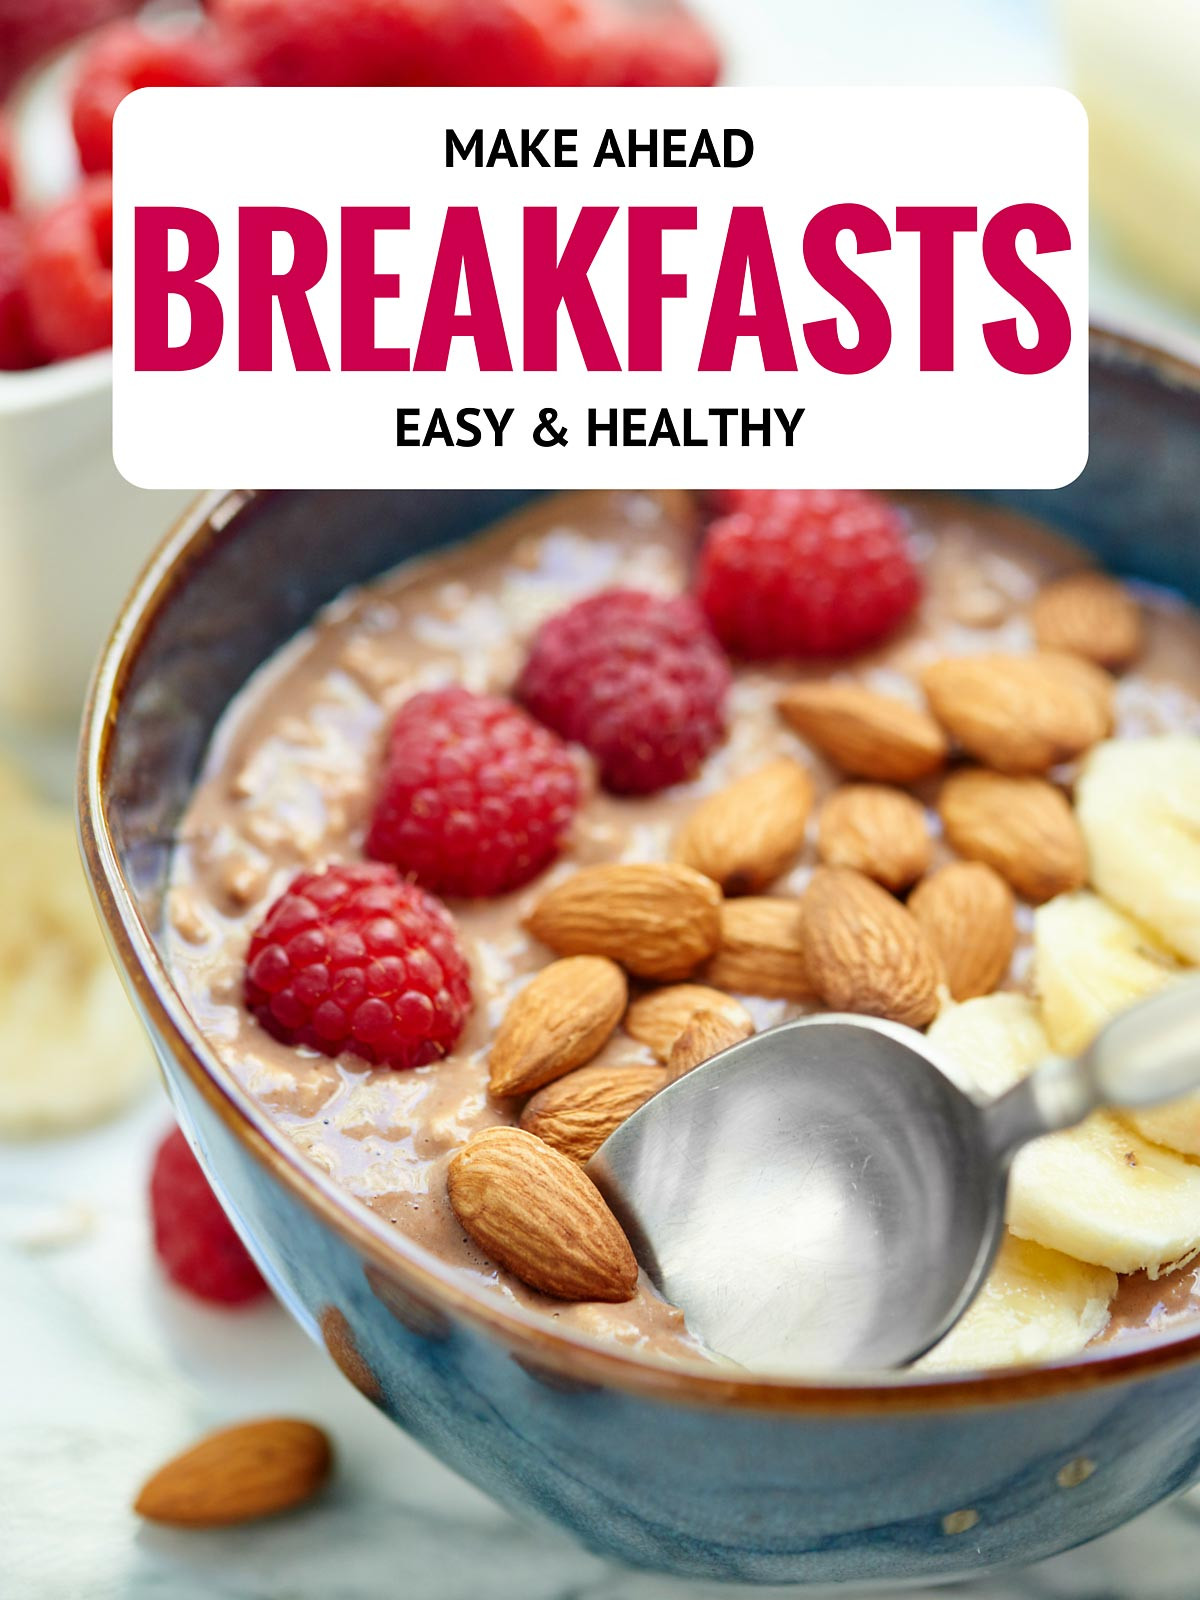 Healthy Easy To Make Breakfast
 Easy Healthy Make Ahead Breakfast Recipes Show Me the Yummy